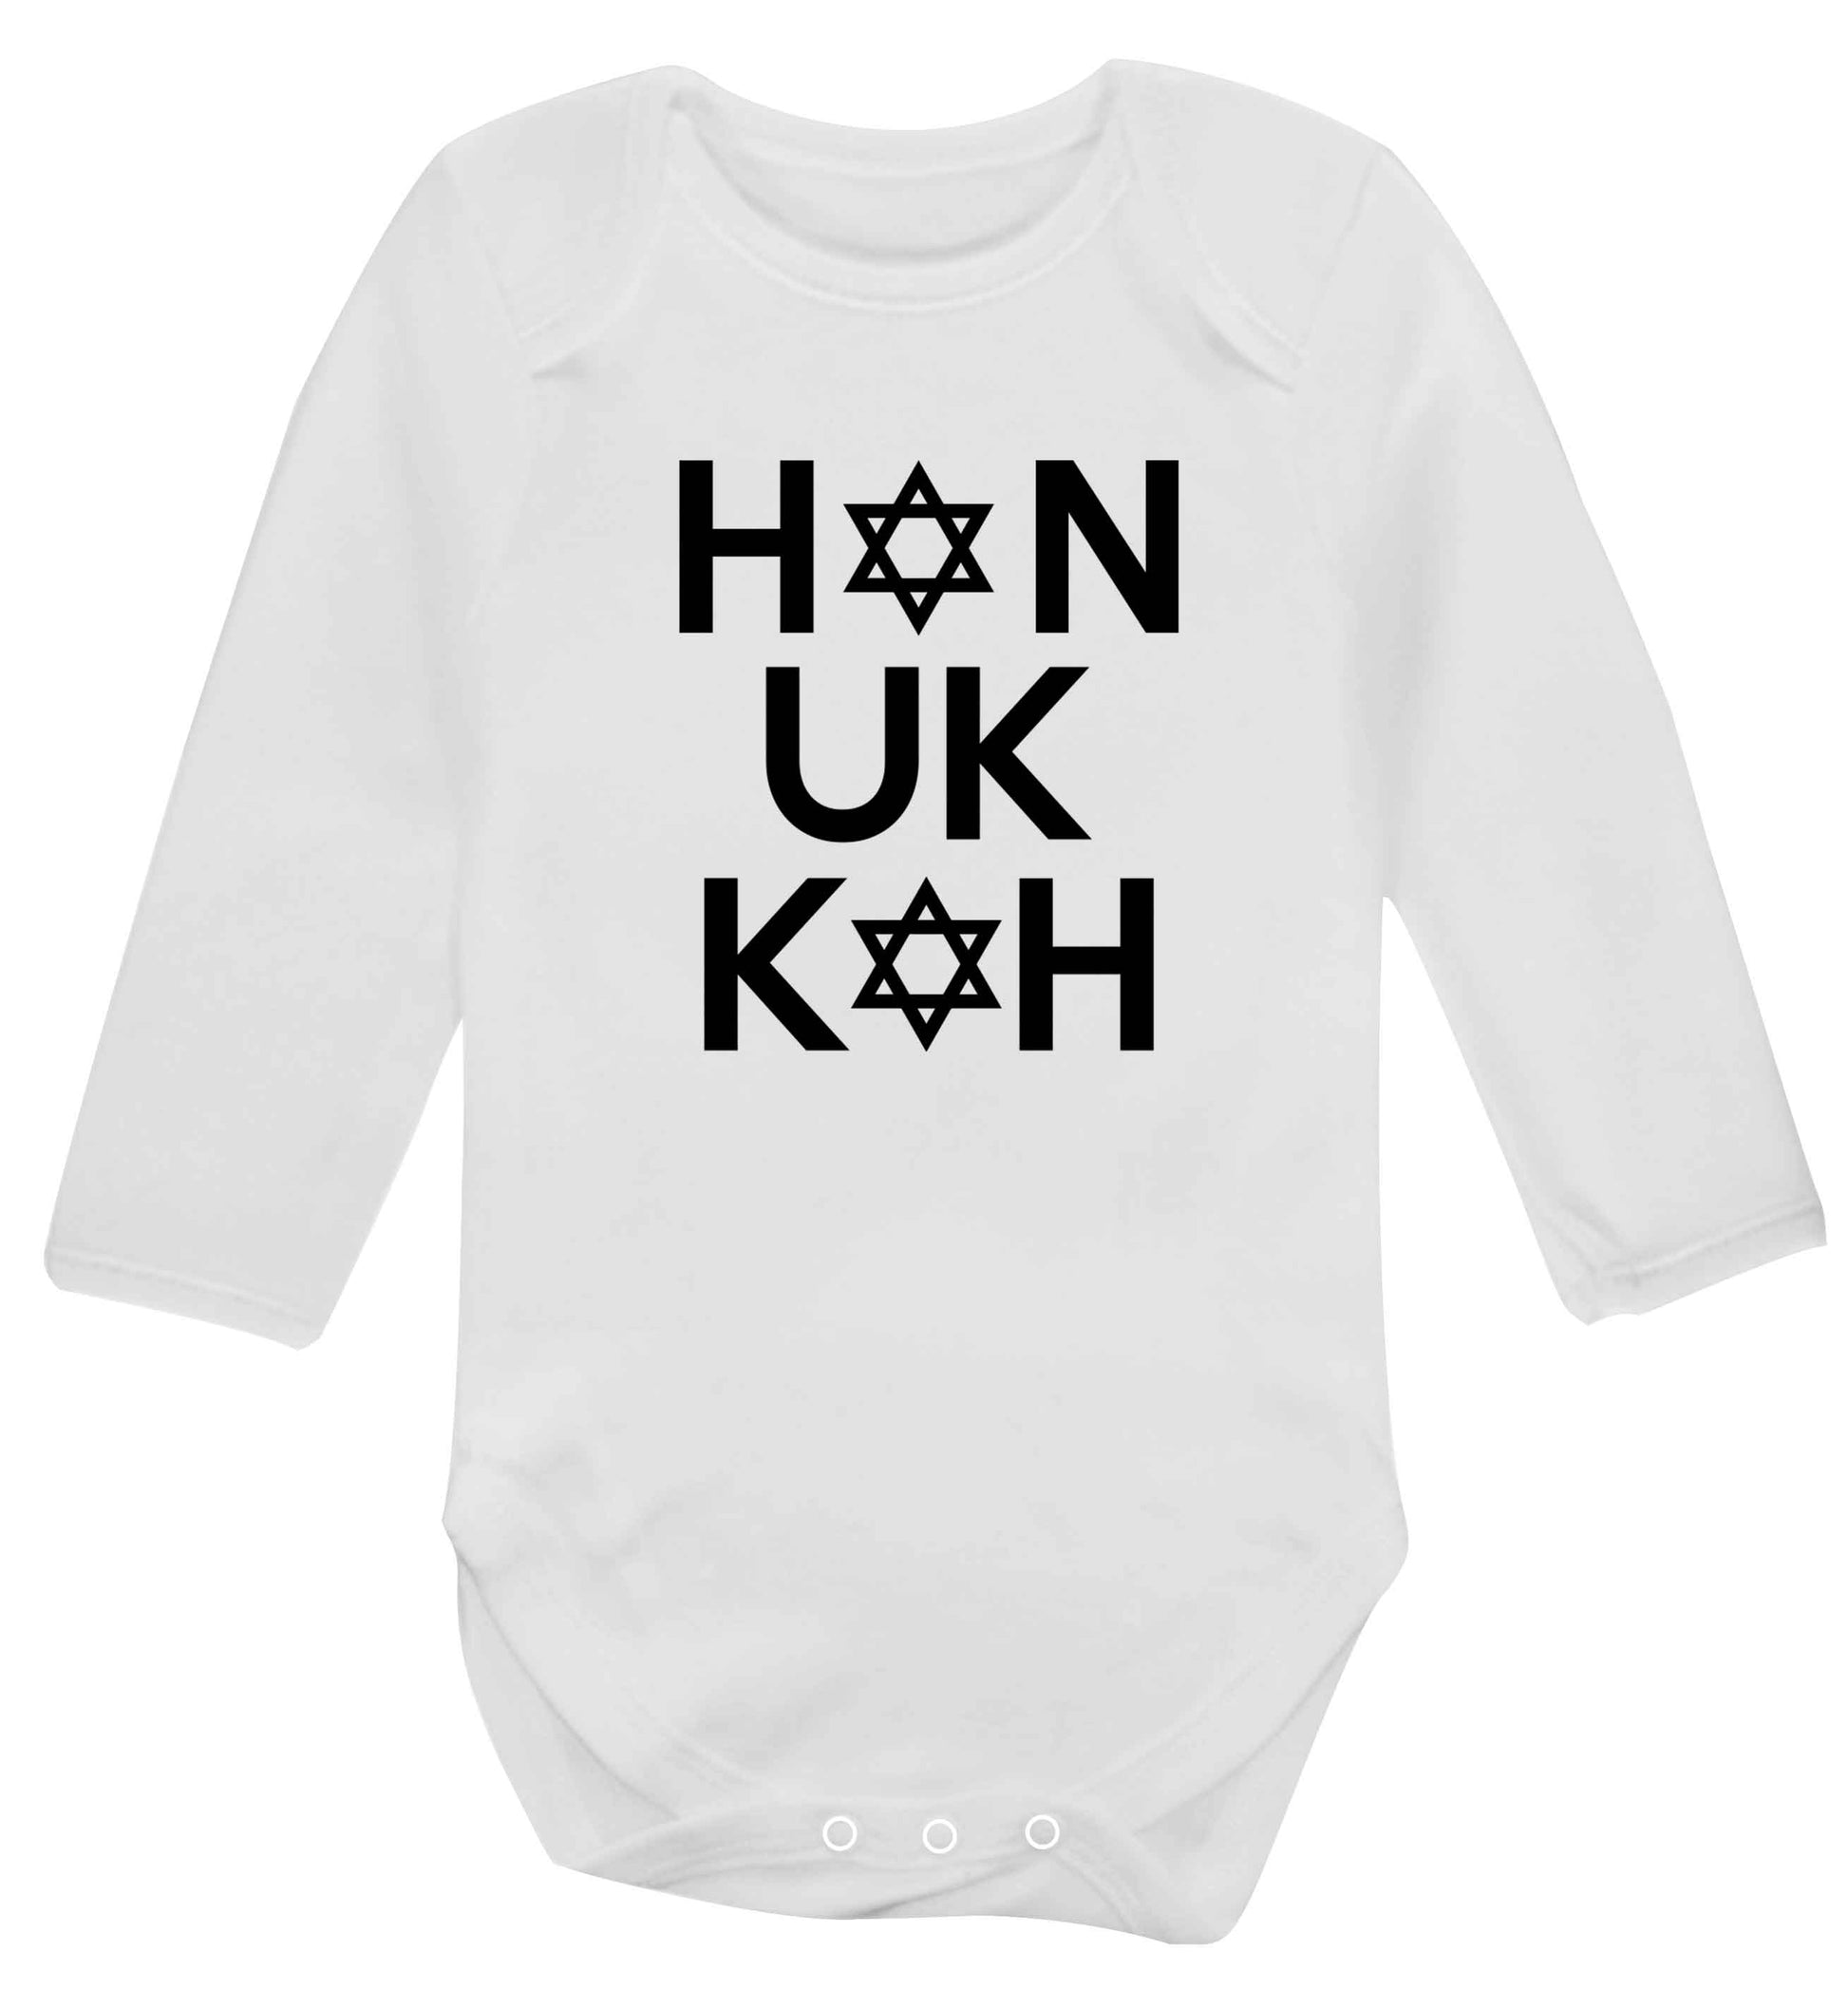 Han uk kah  Hanukkah star of david baby vest long sleeved white 6-12 months